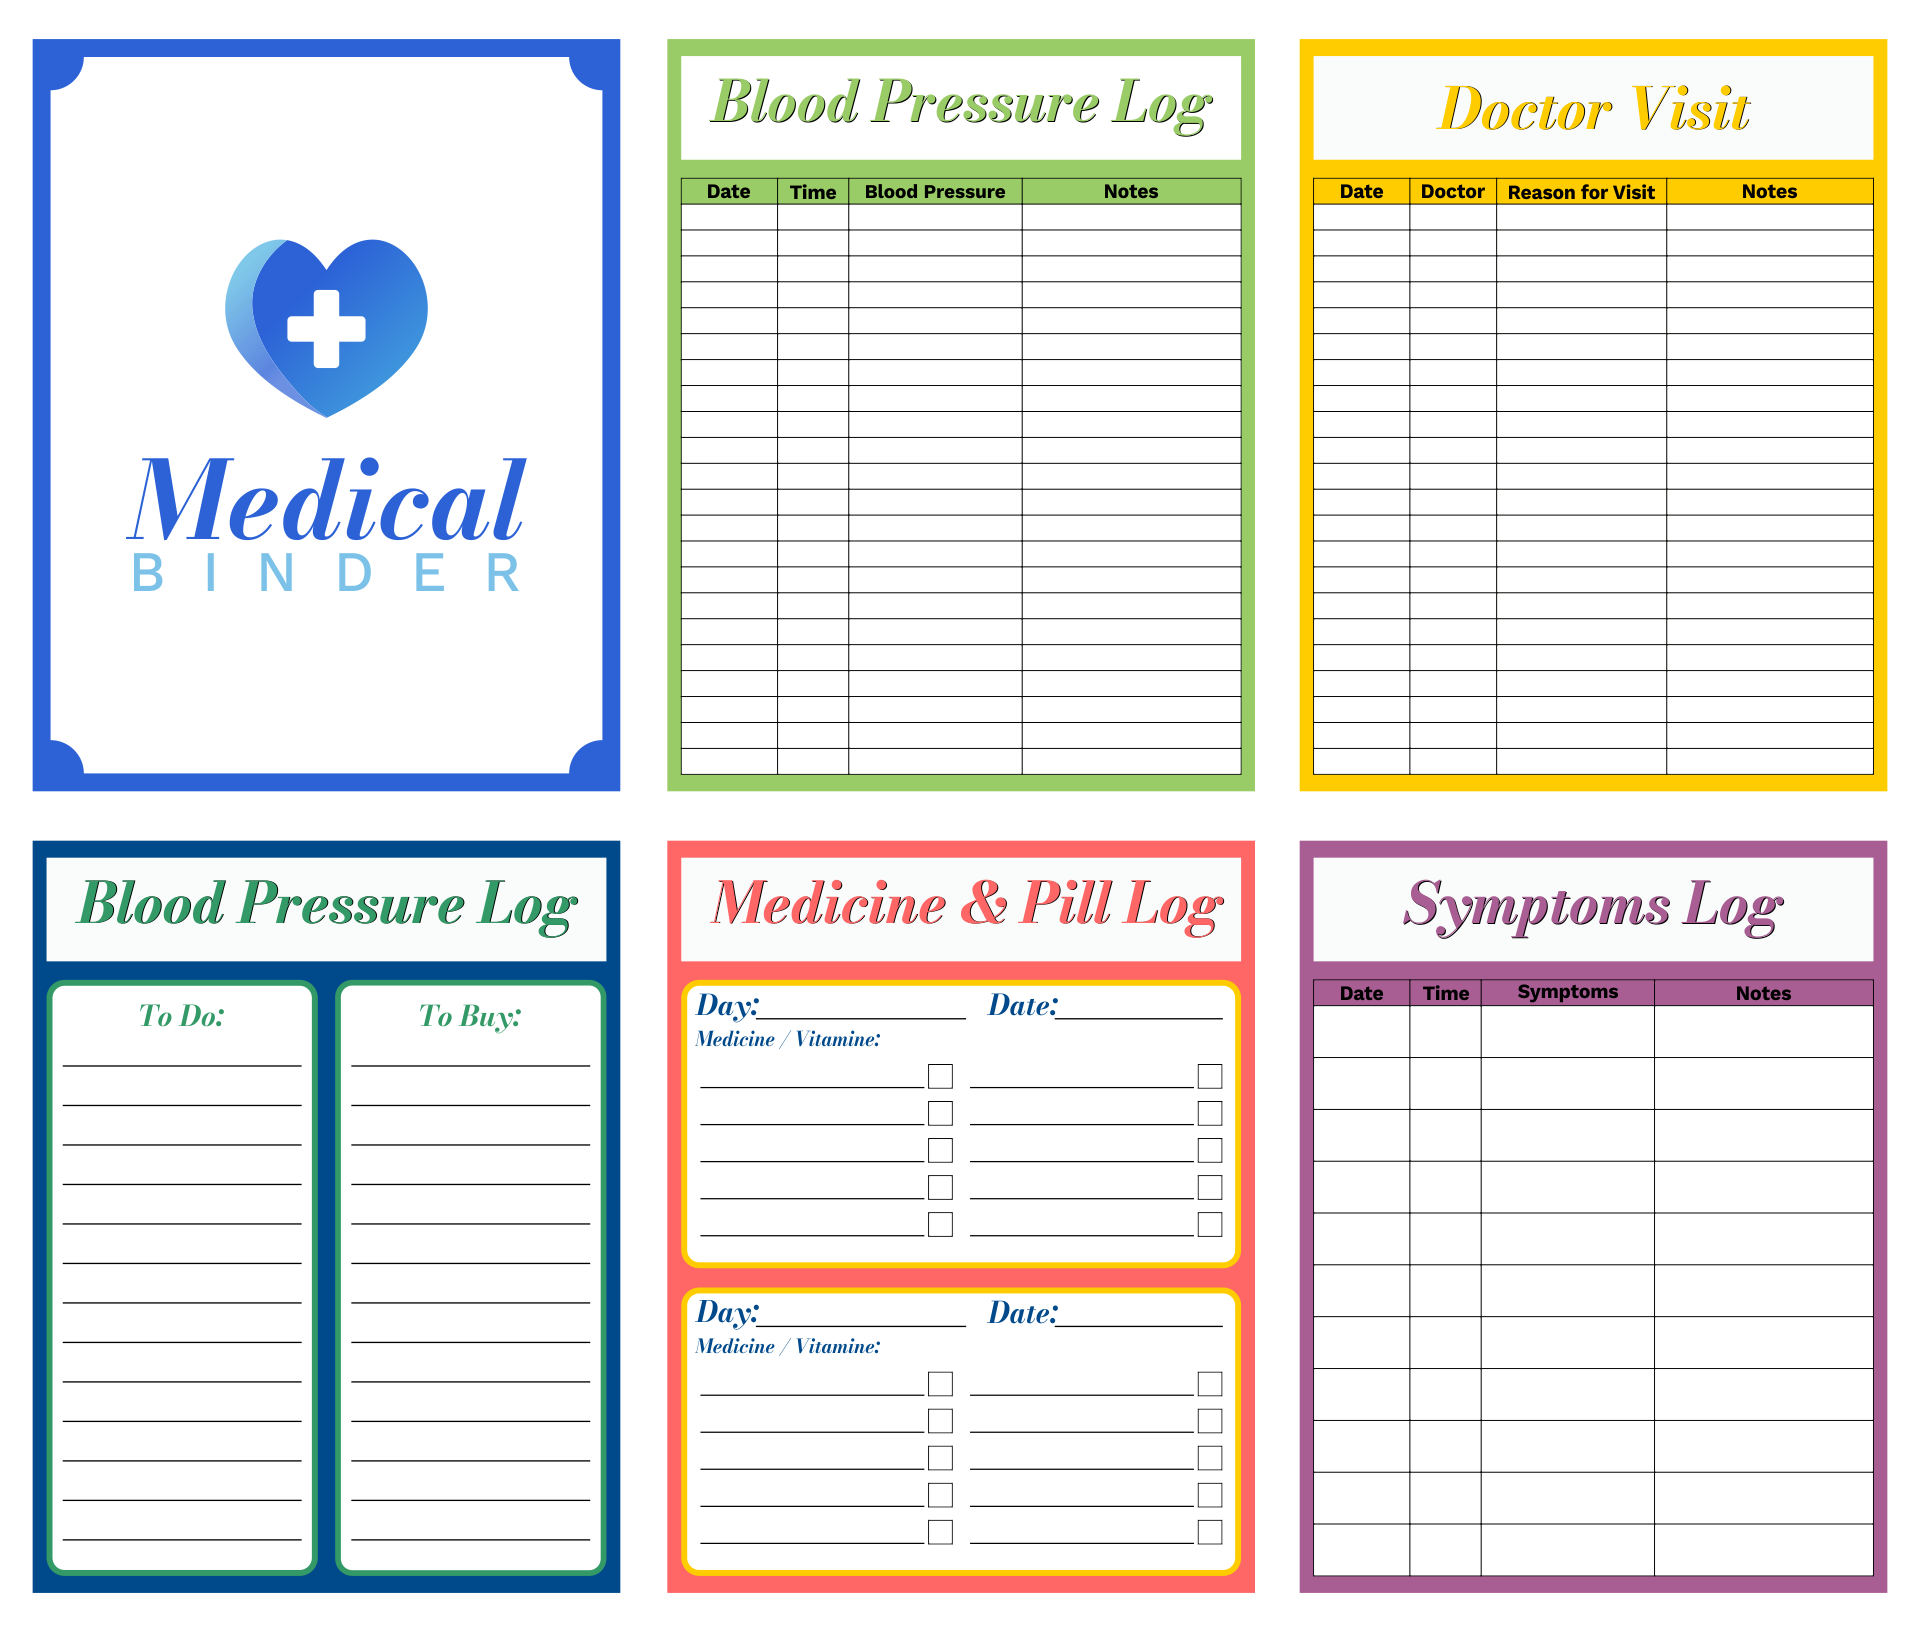 5 Best Images of Free Printable Medical Binder Forms Free Printable